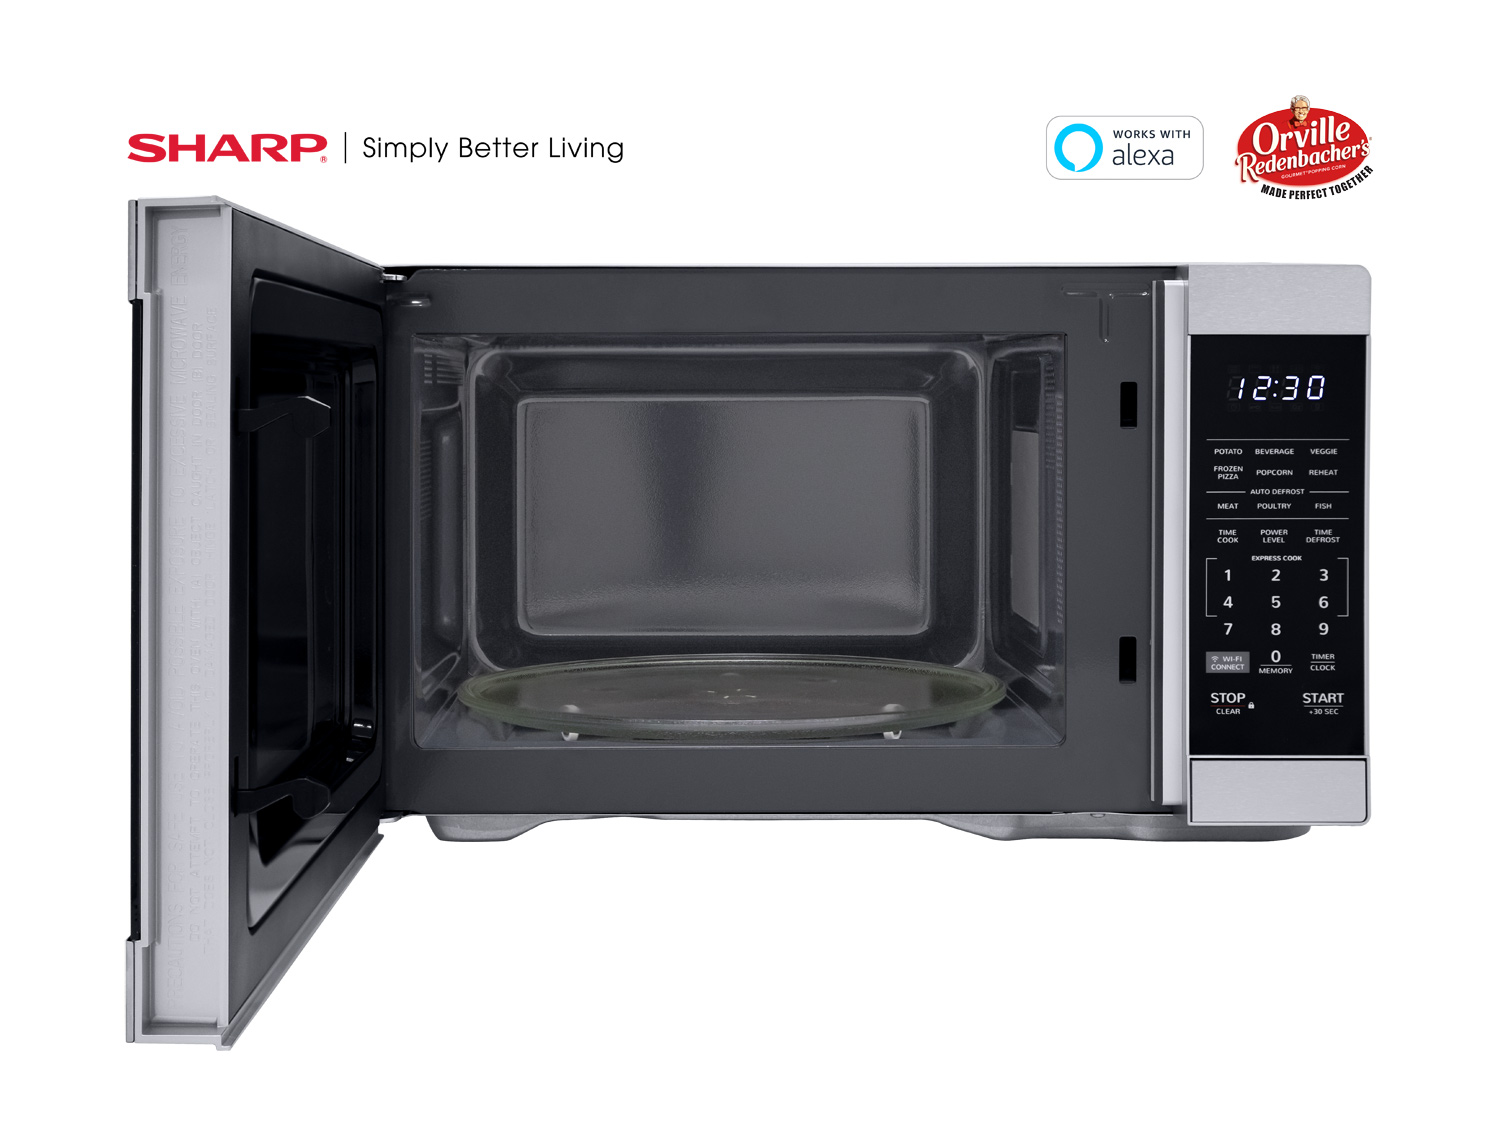 Horno De Microondas Digital 1000W Oven Countertop 1.1 cubit ft Metallic Red